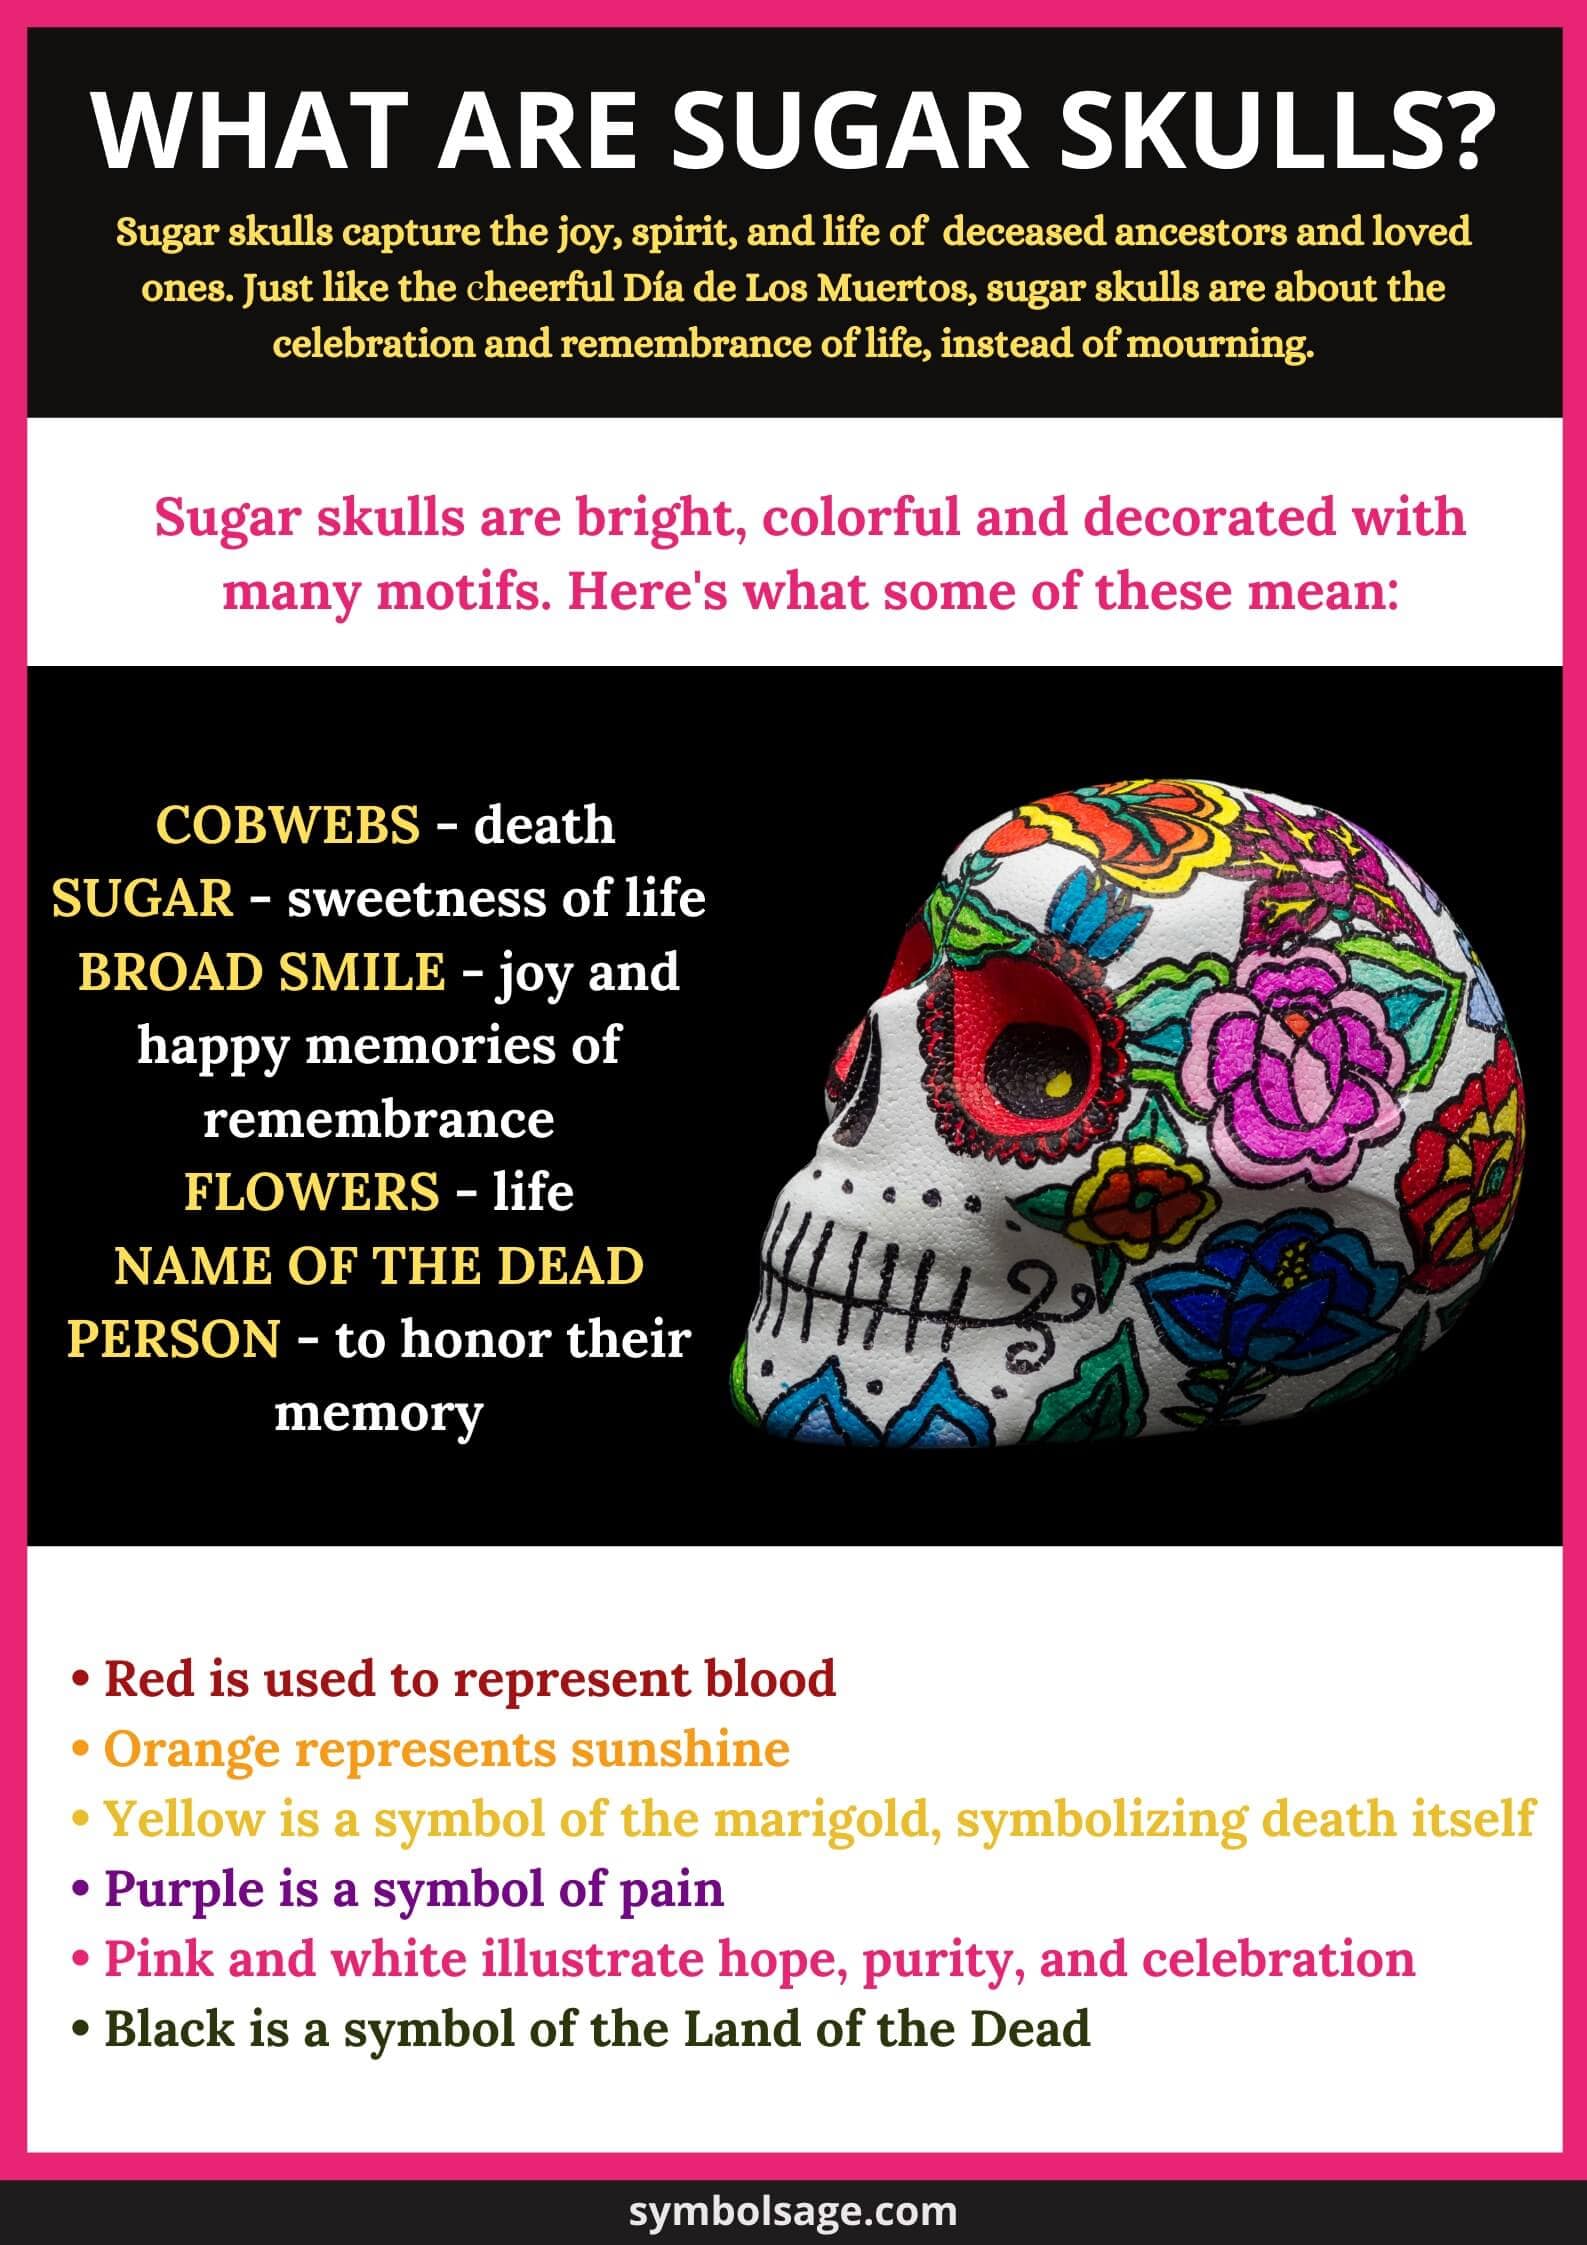 Sugar skull symbolism explained